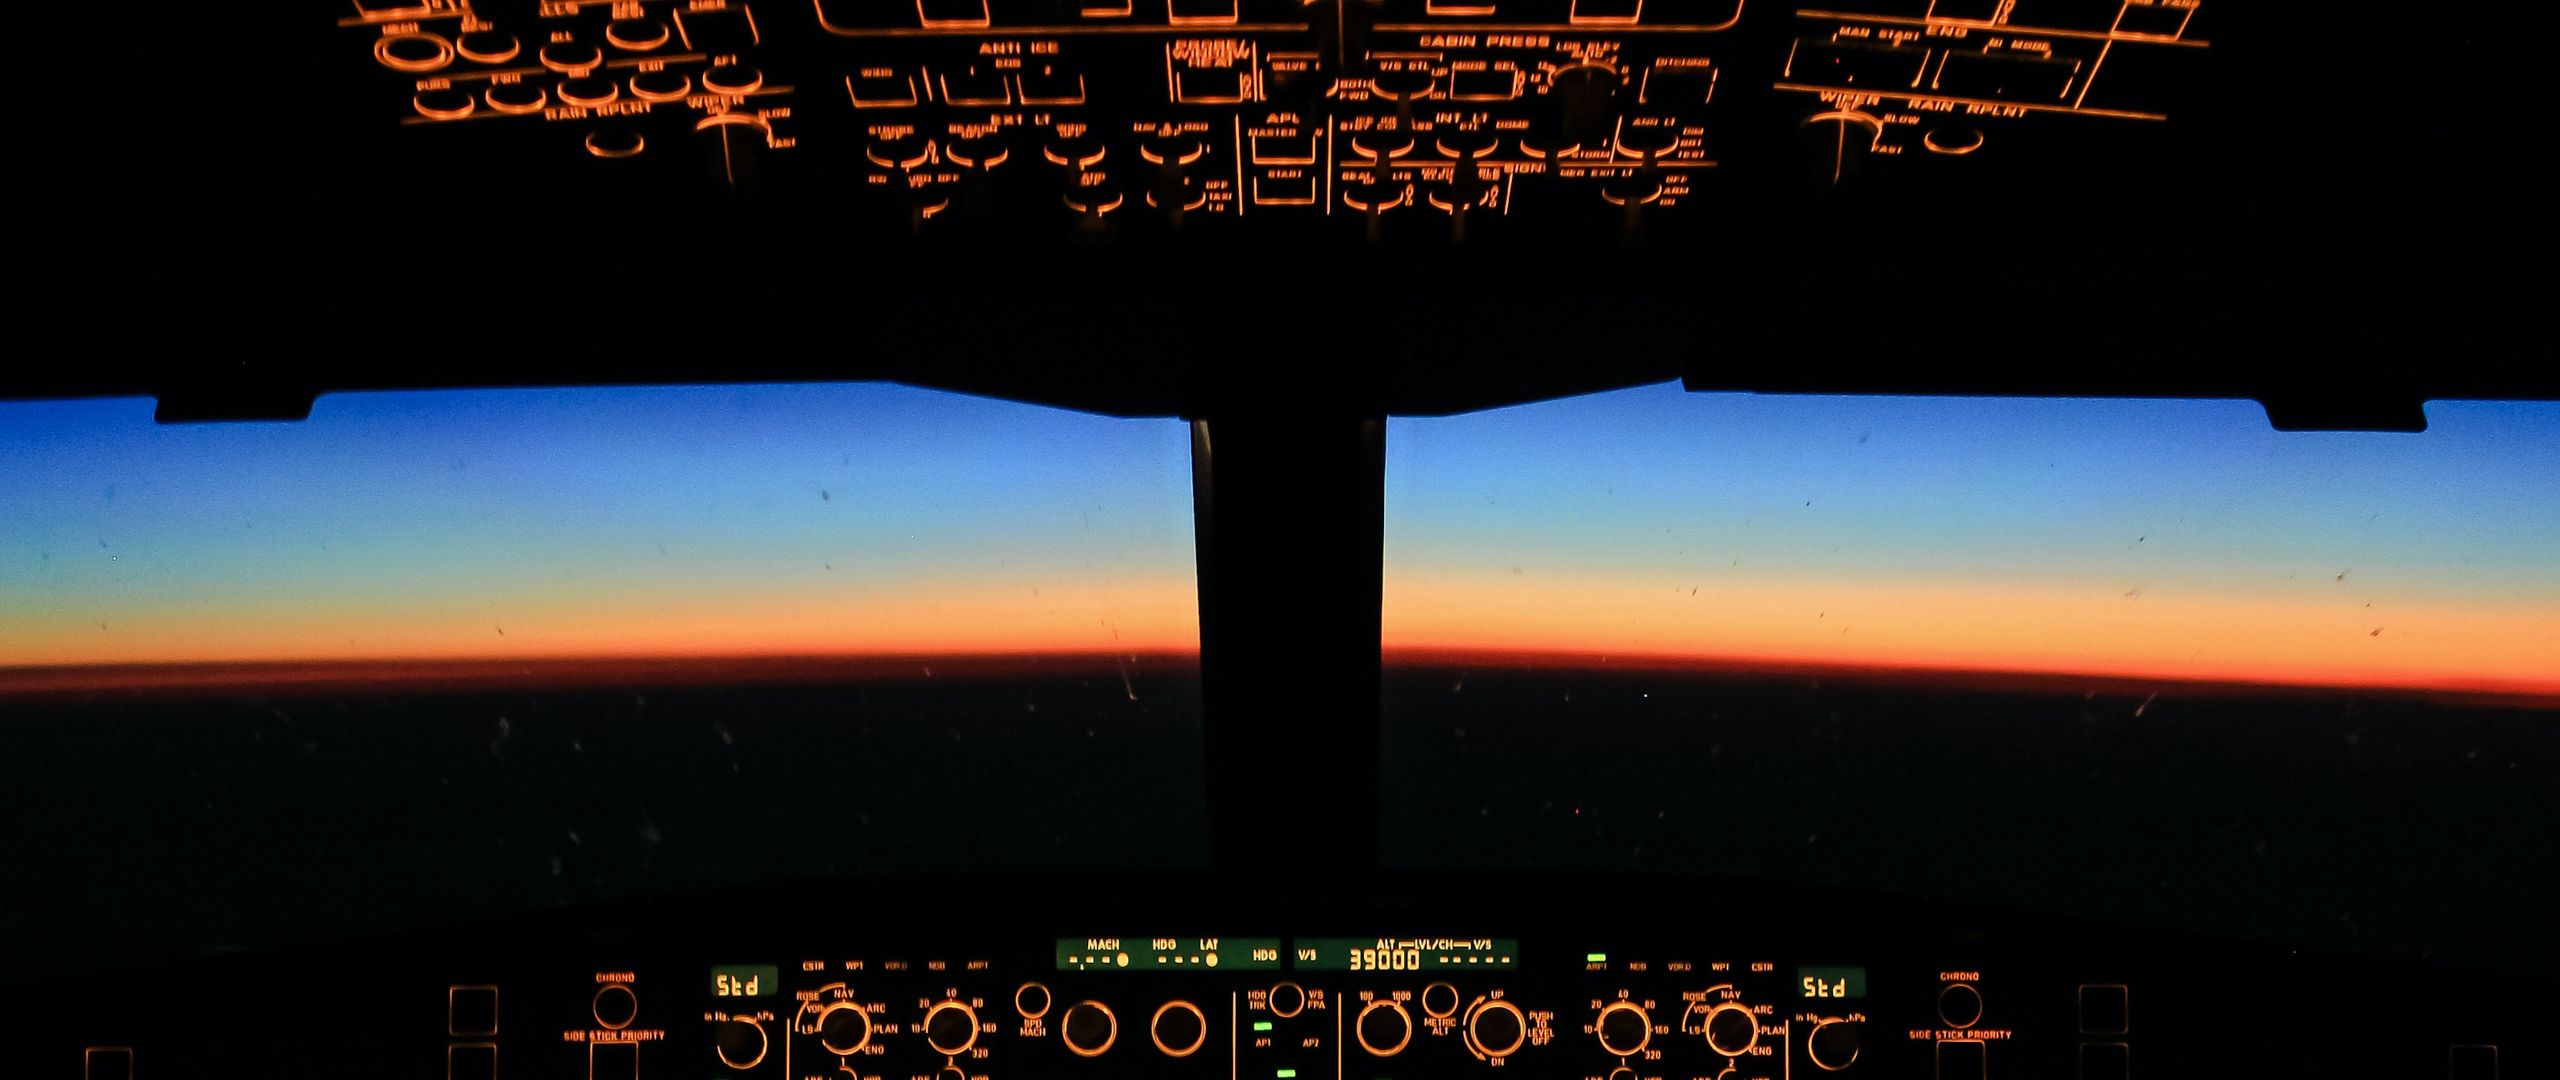 Boeing 777 cockpit FSX | Eliky | Flickr